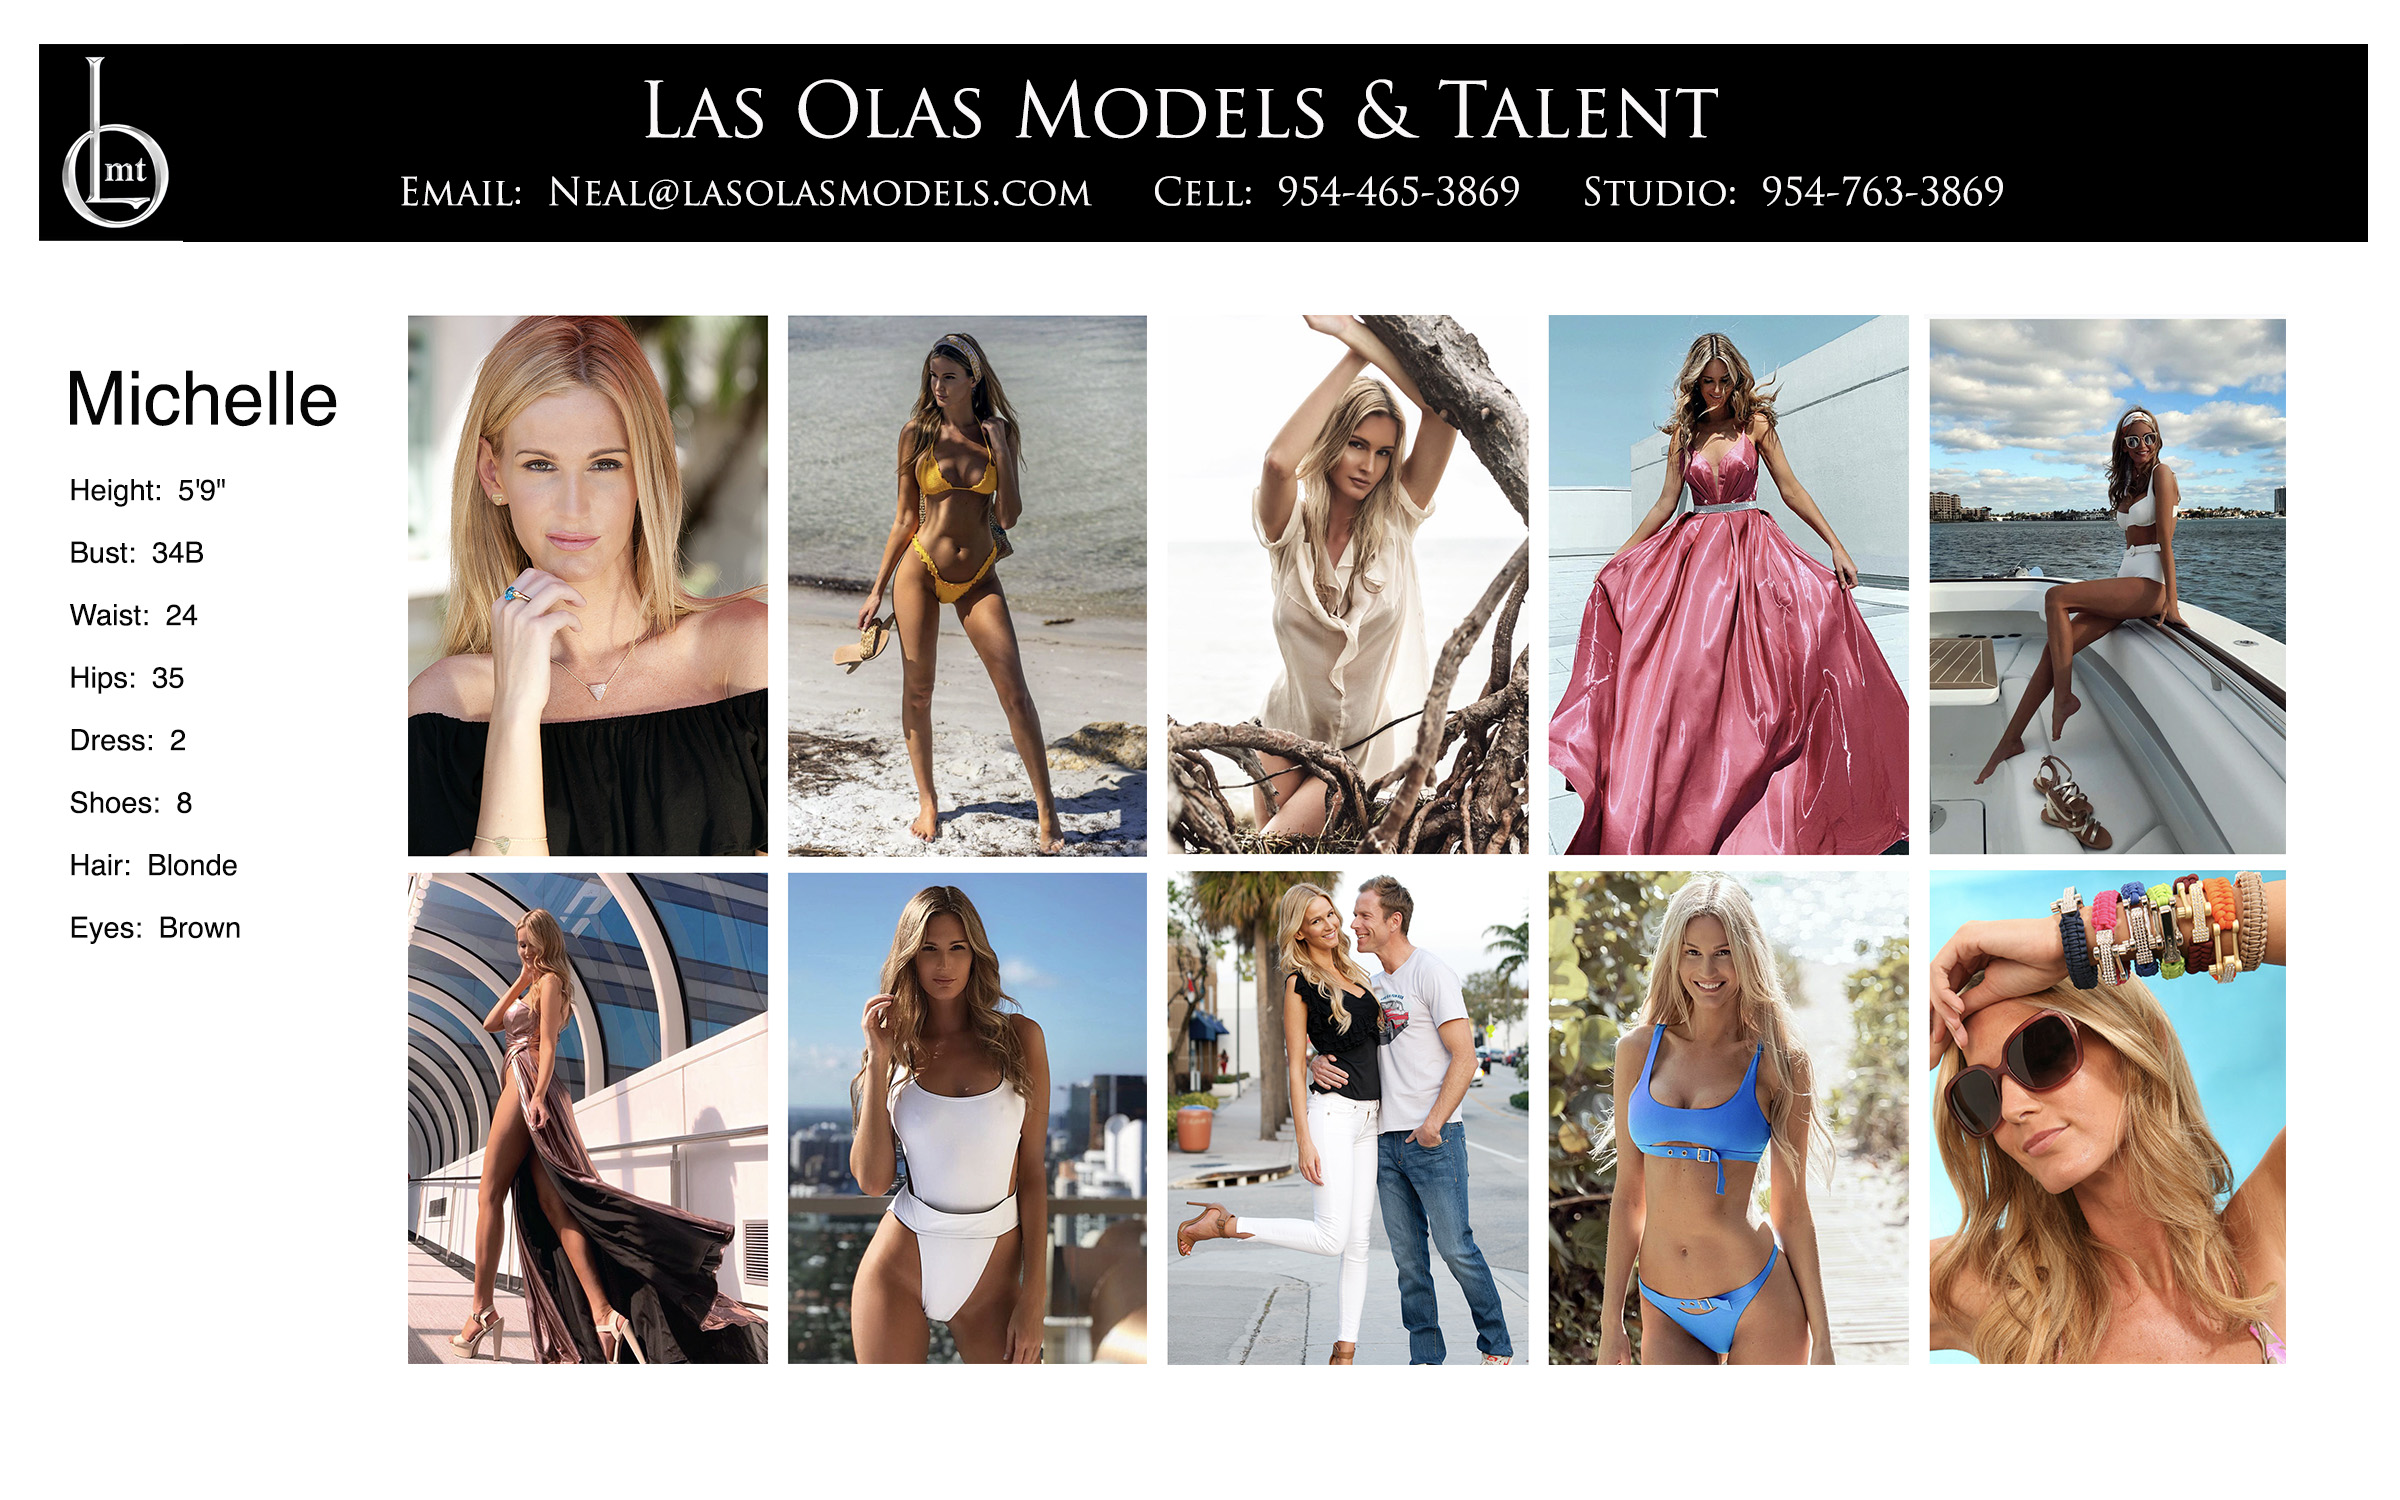 Models Fort Lauderdale Miami South Florida - Print Video Commercial Catalog - Las Olas Models & Talent - Michelle Comp